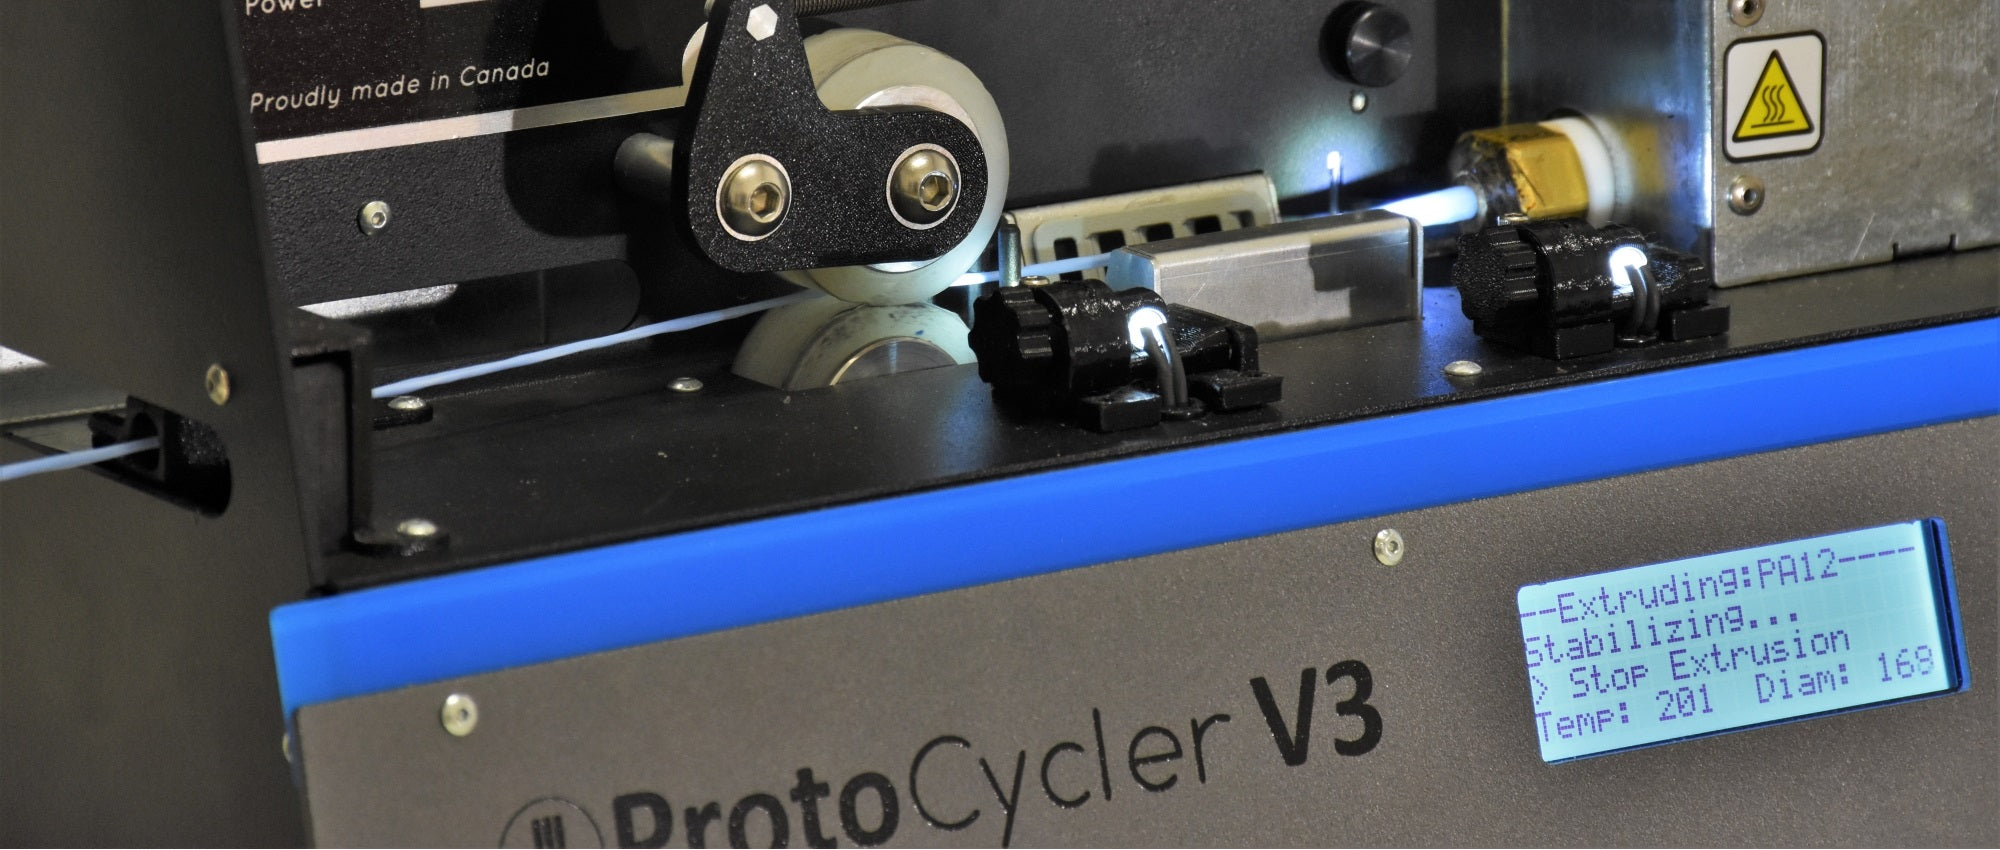 ProtoCycler V3 extrudes high quality 3D printer filament. Make your own 3D printer filament with ProtoCycler V3!